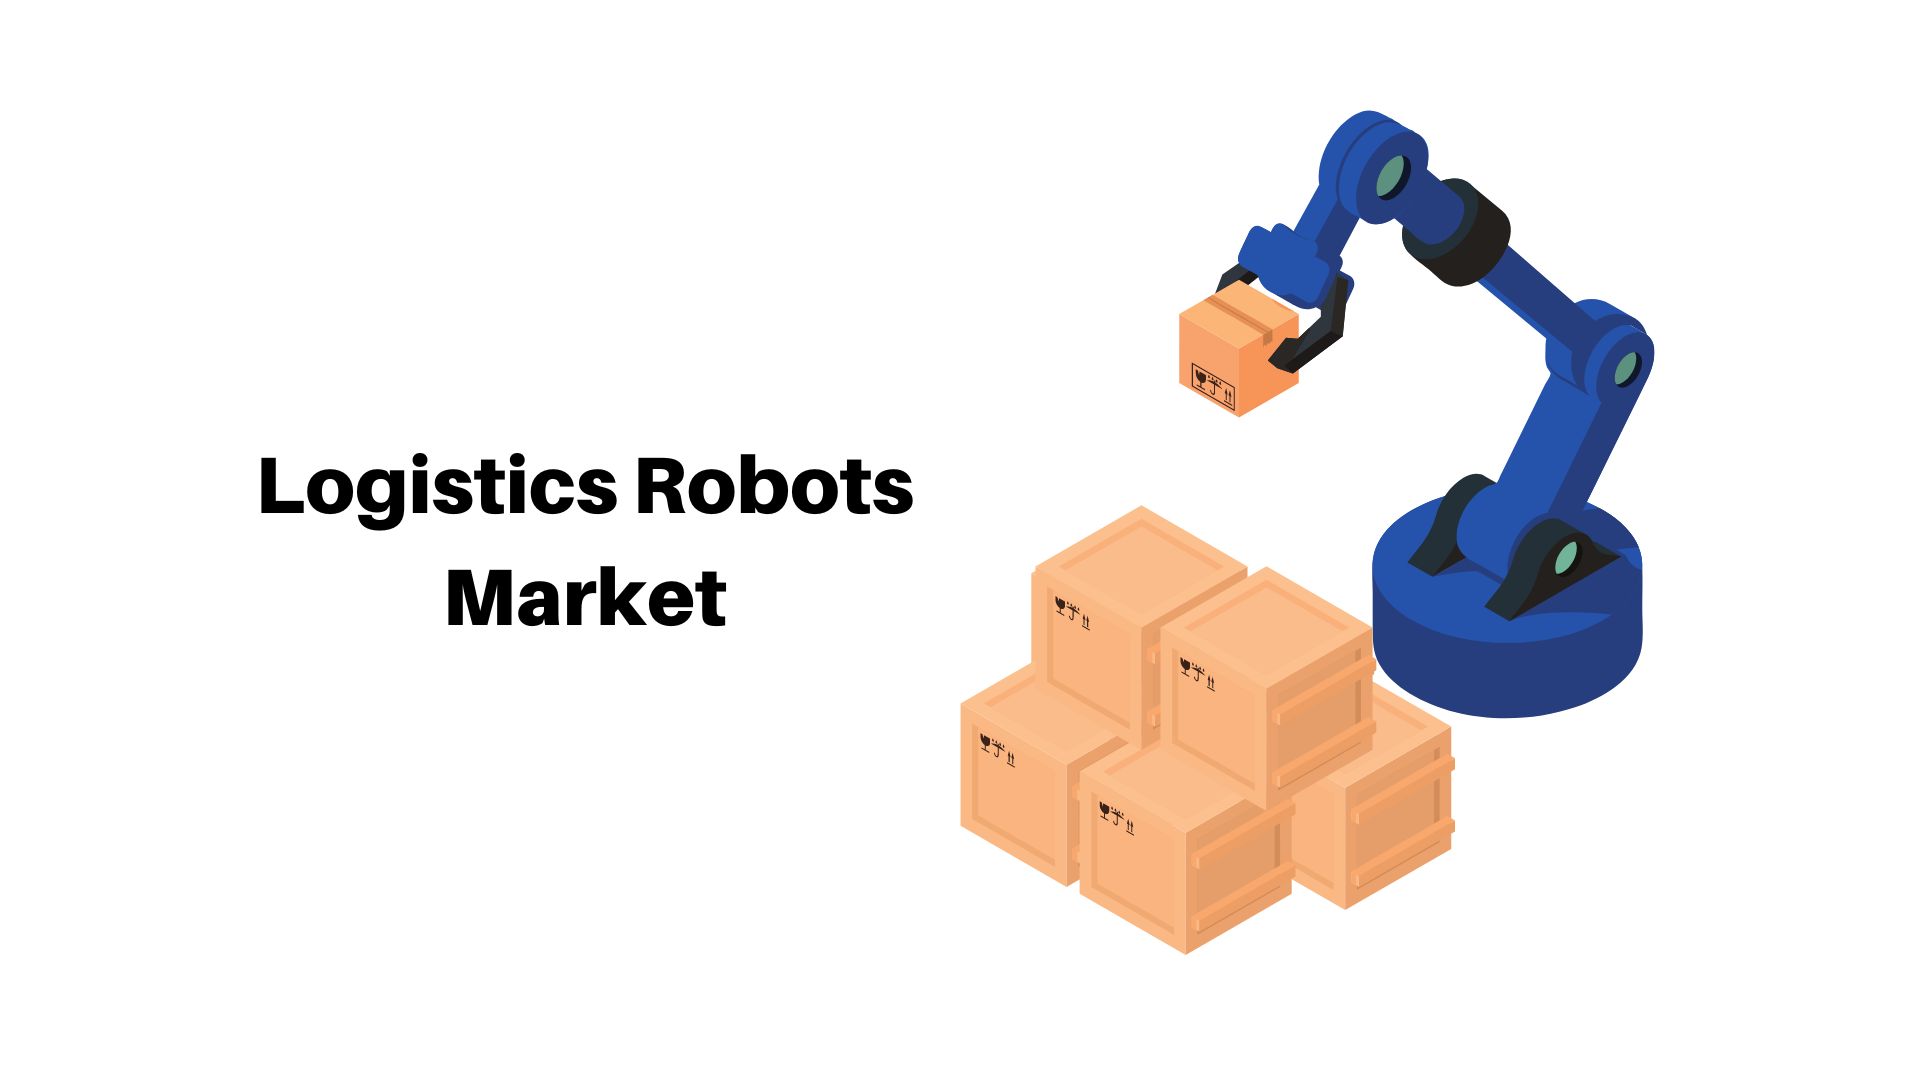 Logistics Robots Market to Reach USD 31.6 Billion by 2032, Says Market.us Research Study